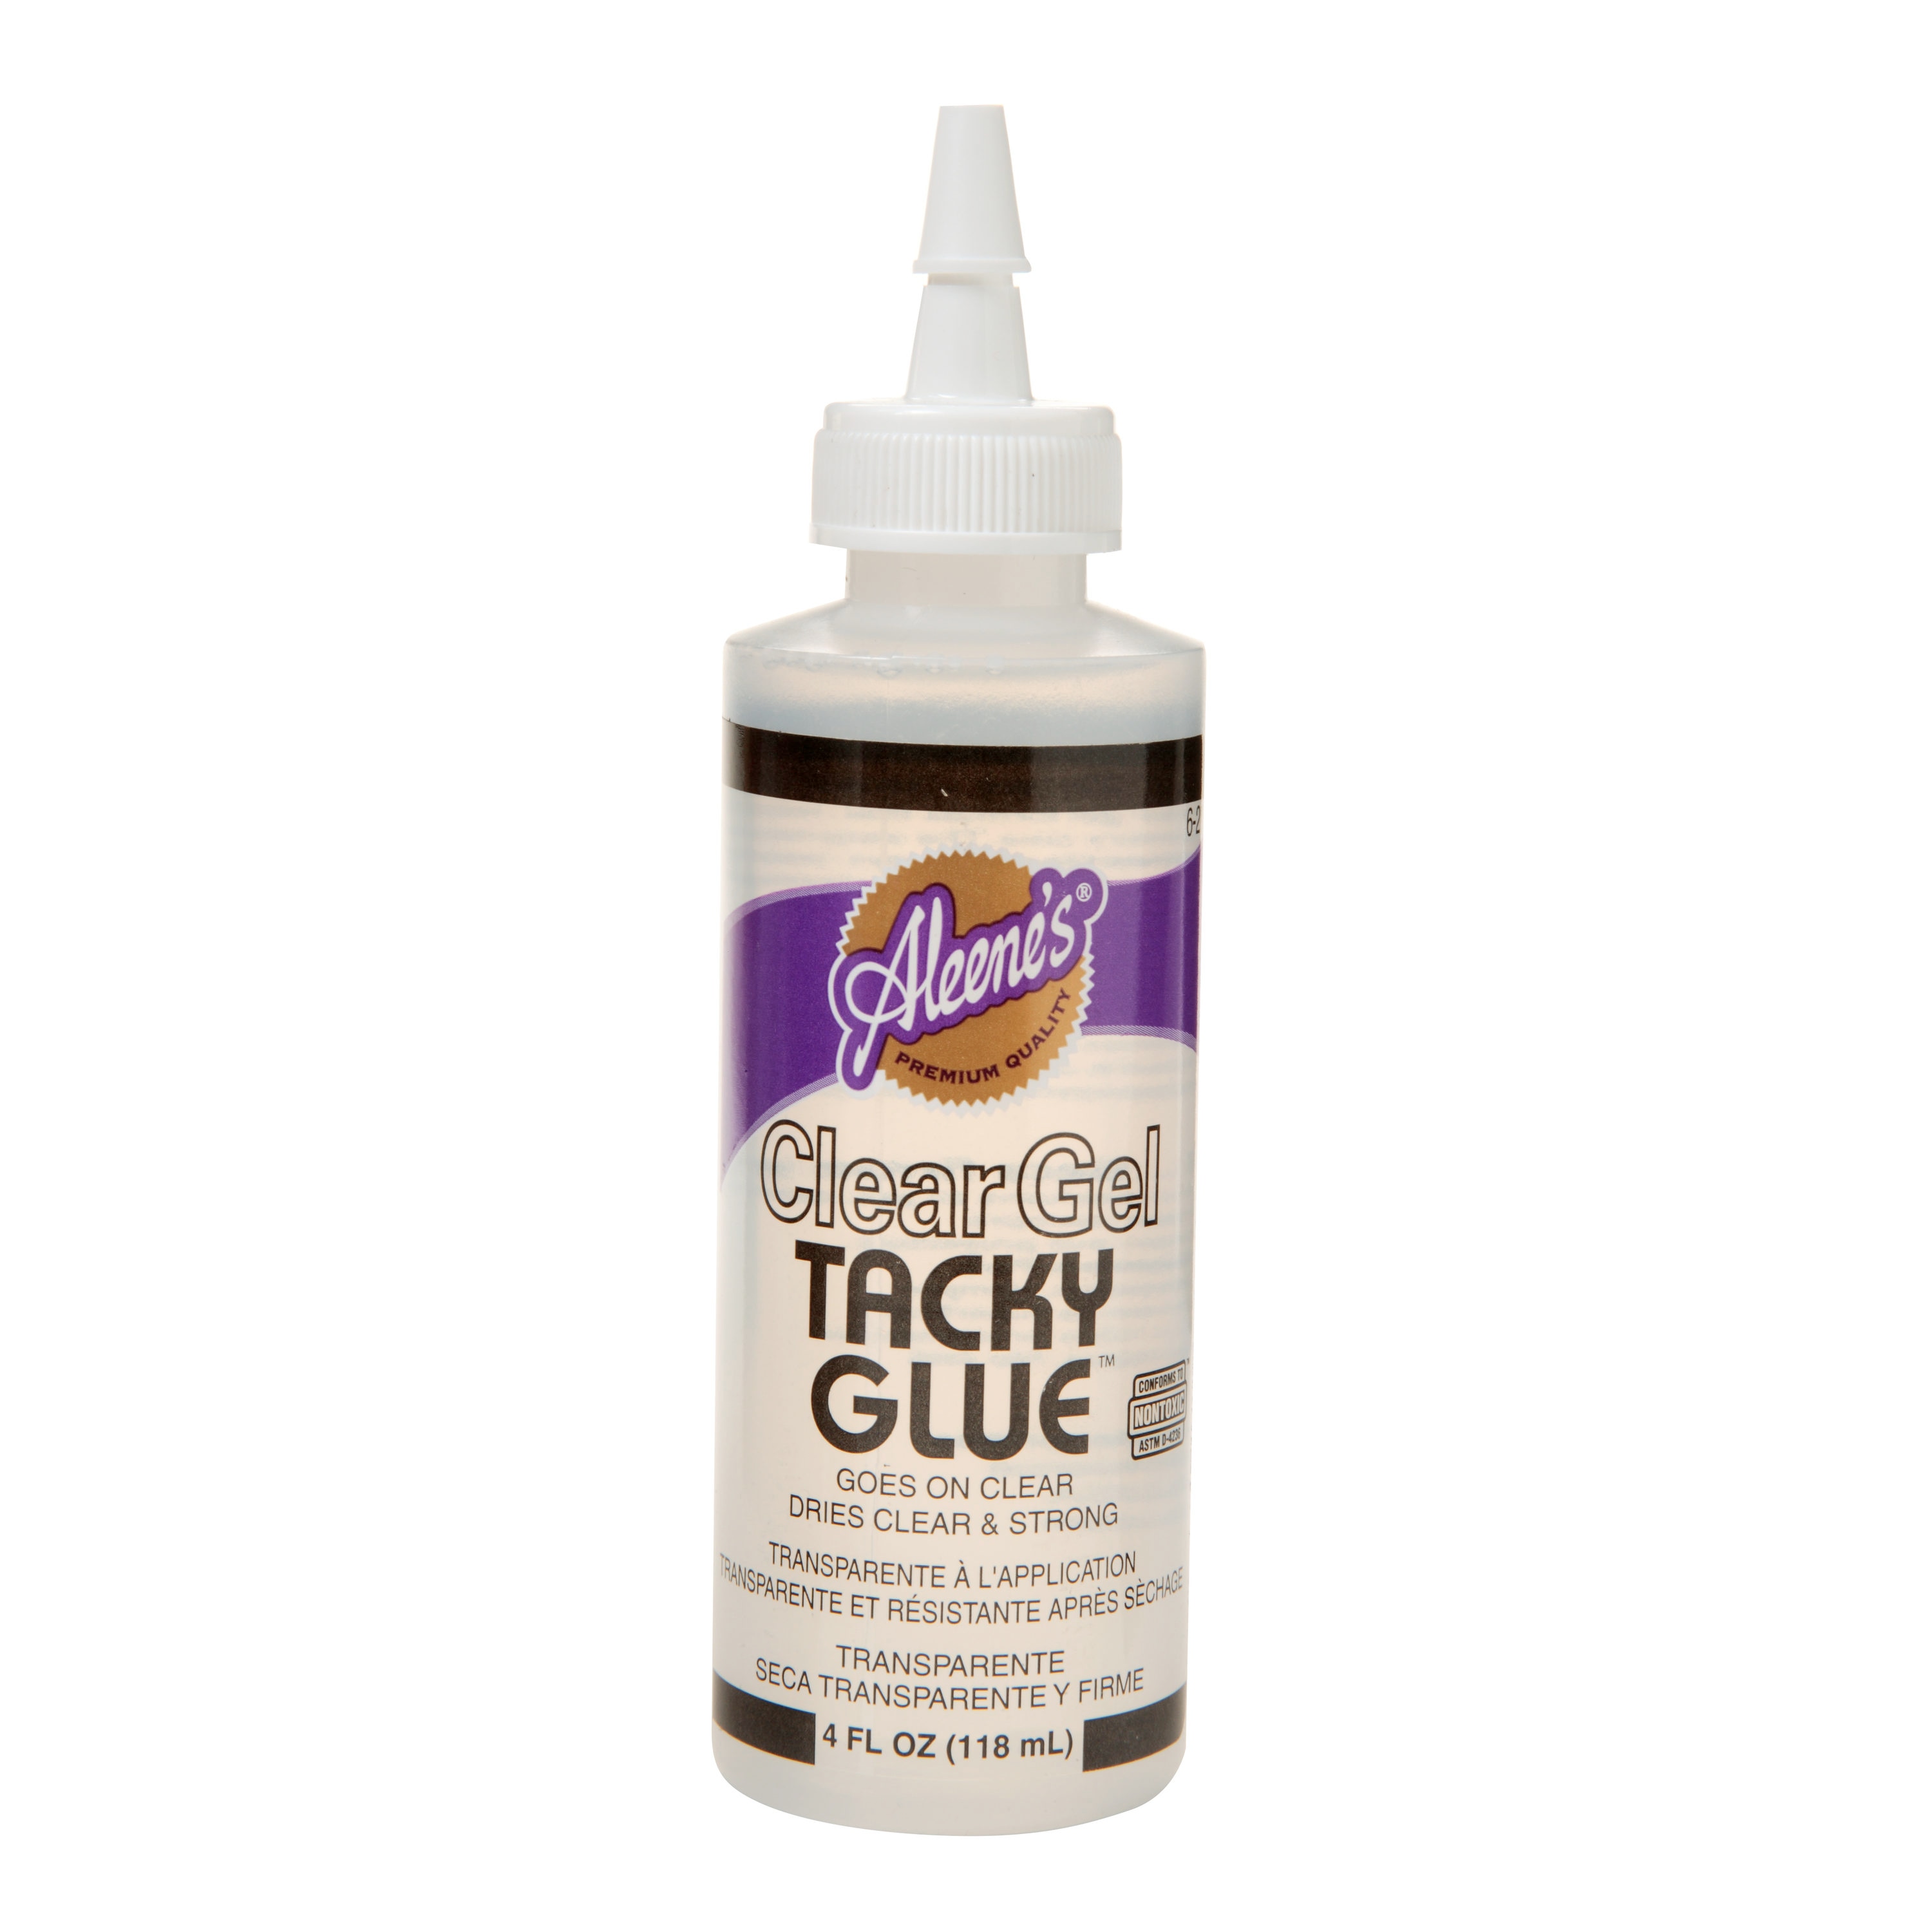 Aleene's Quick Dry Tacky Glue, 4 fl oz - 3 Pack, Multi